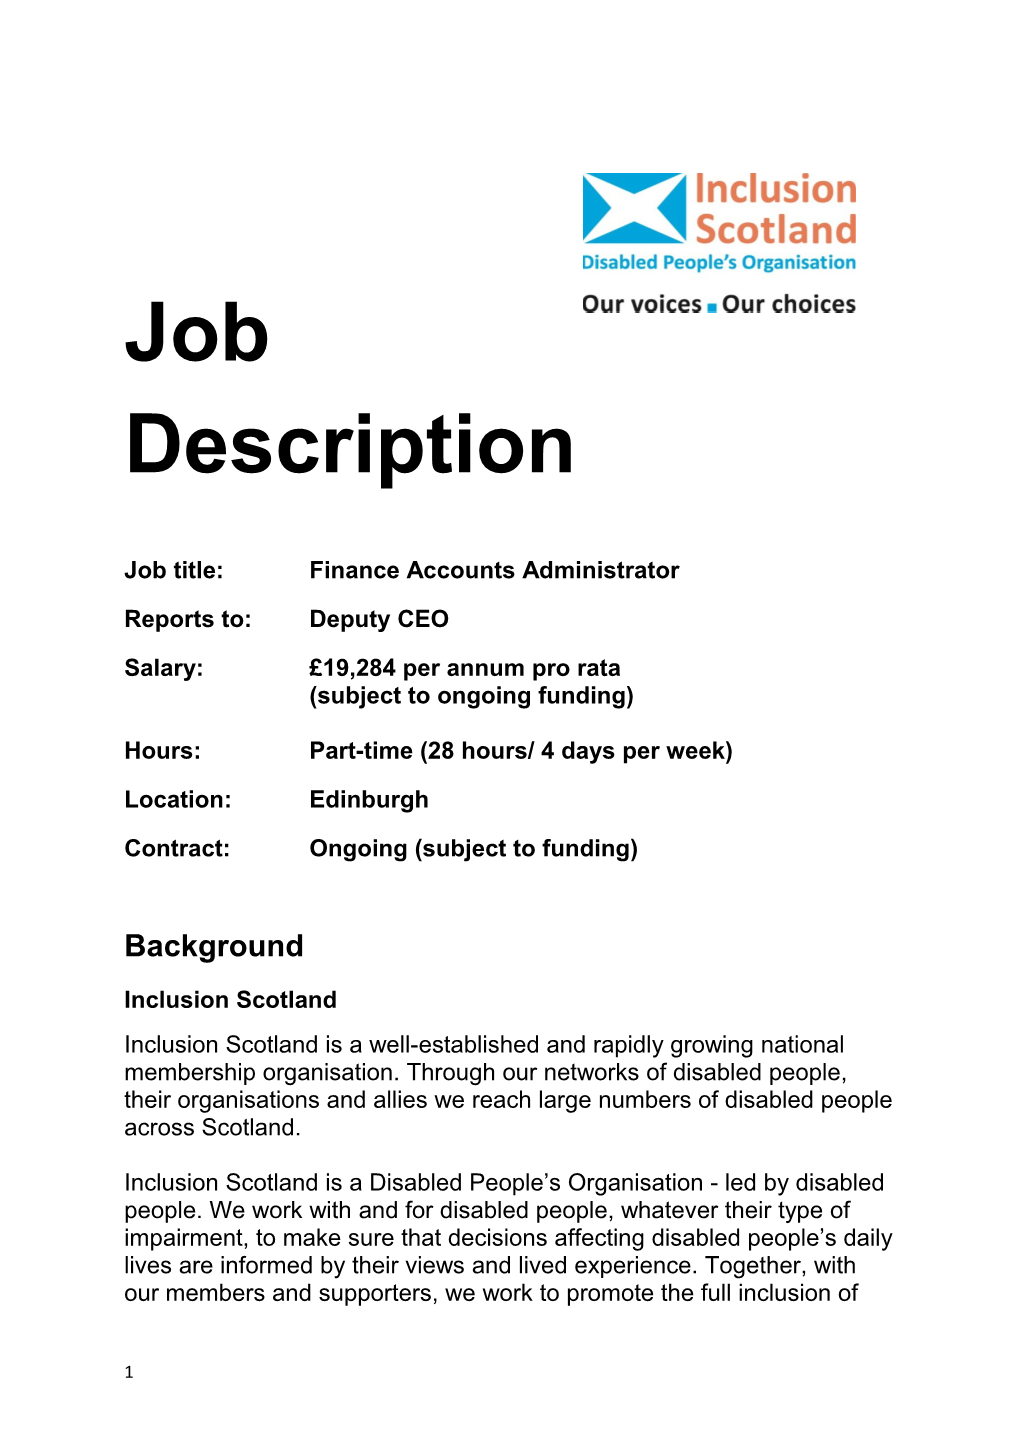 Job Title: Finance Accounts Administrator